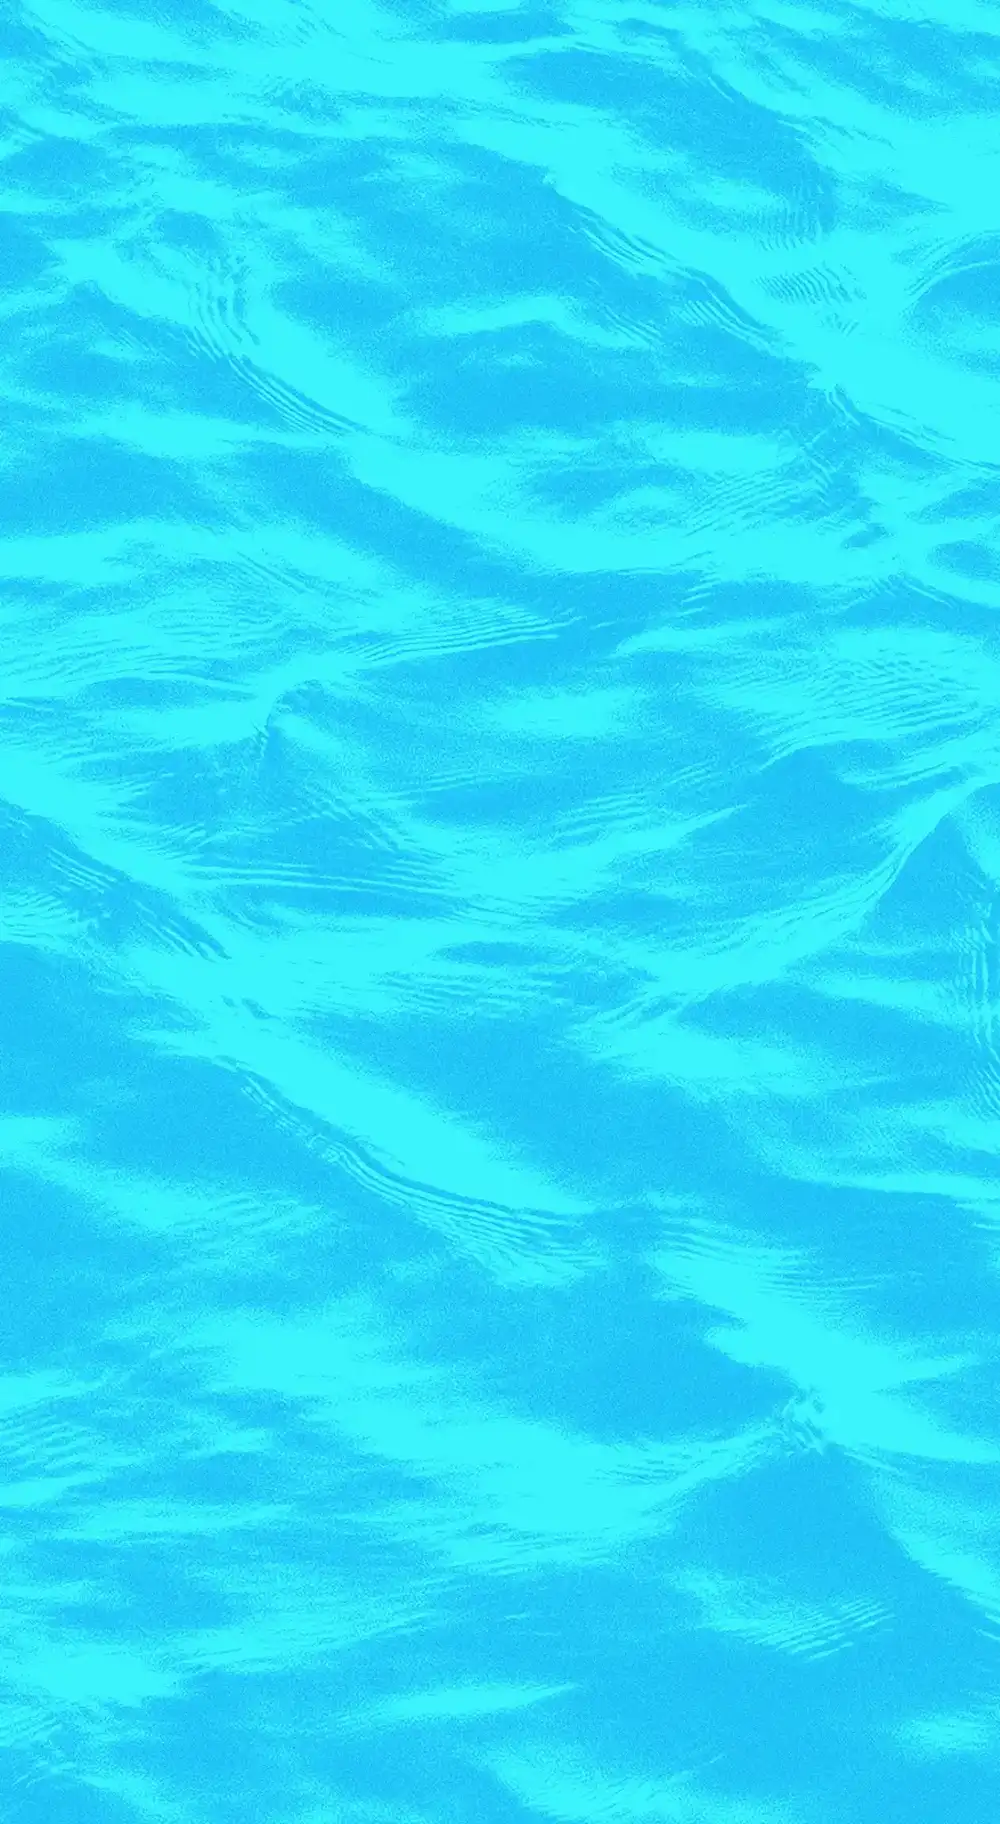 Blue waves textural image